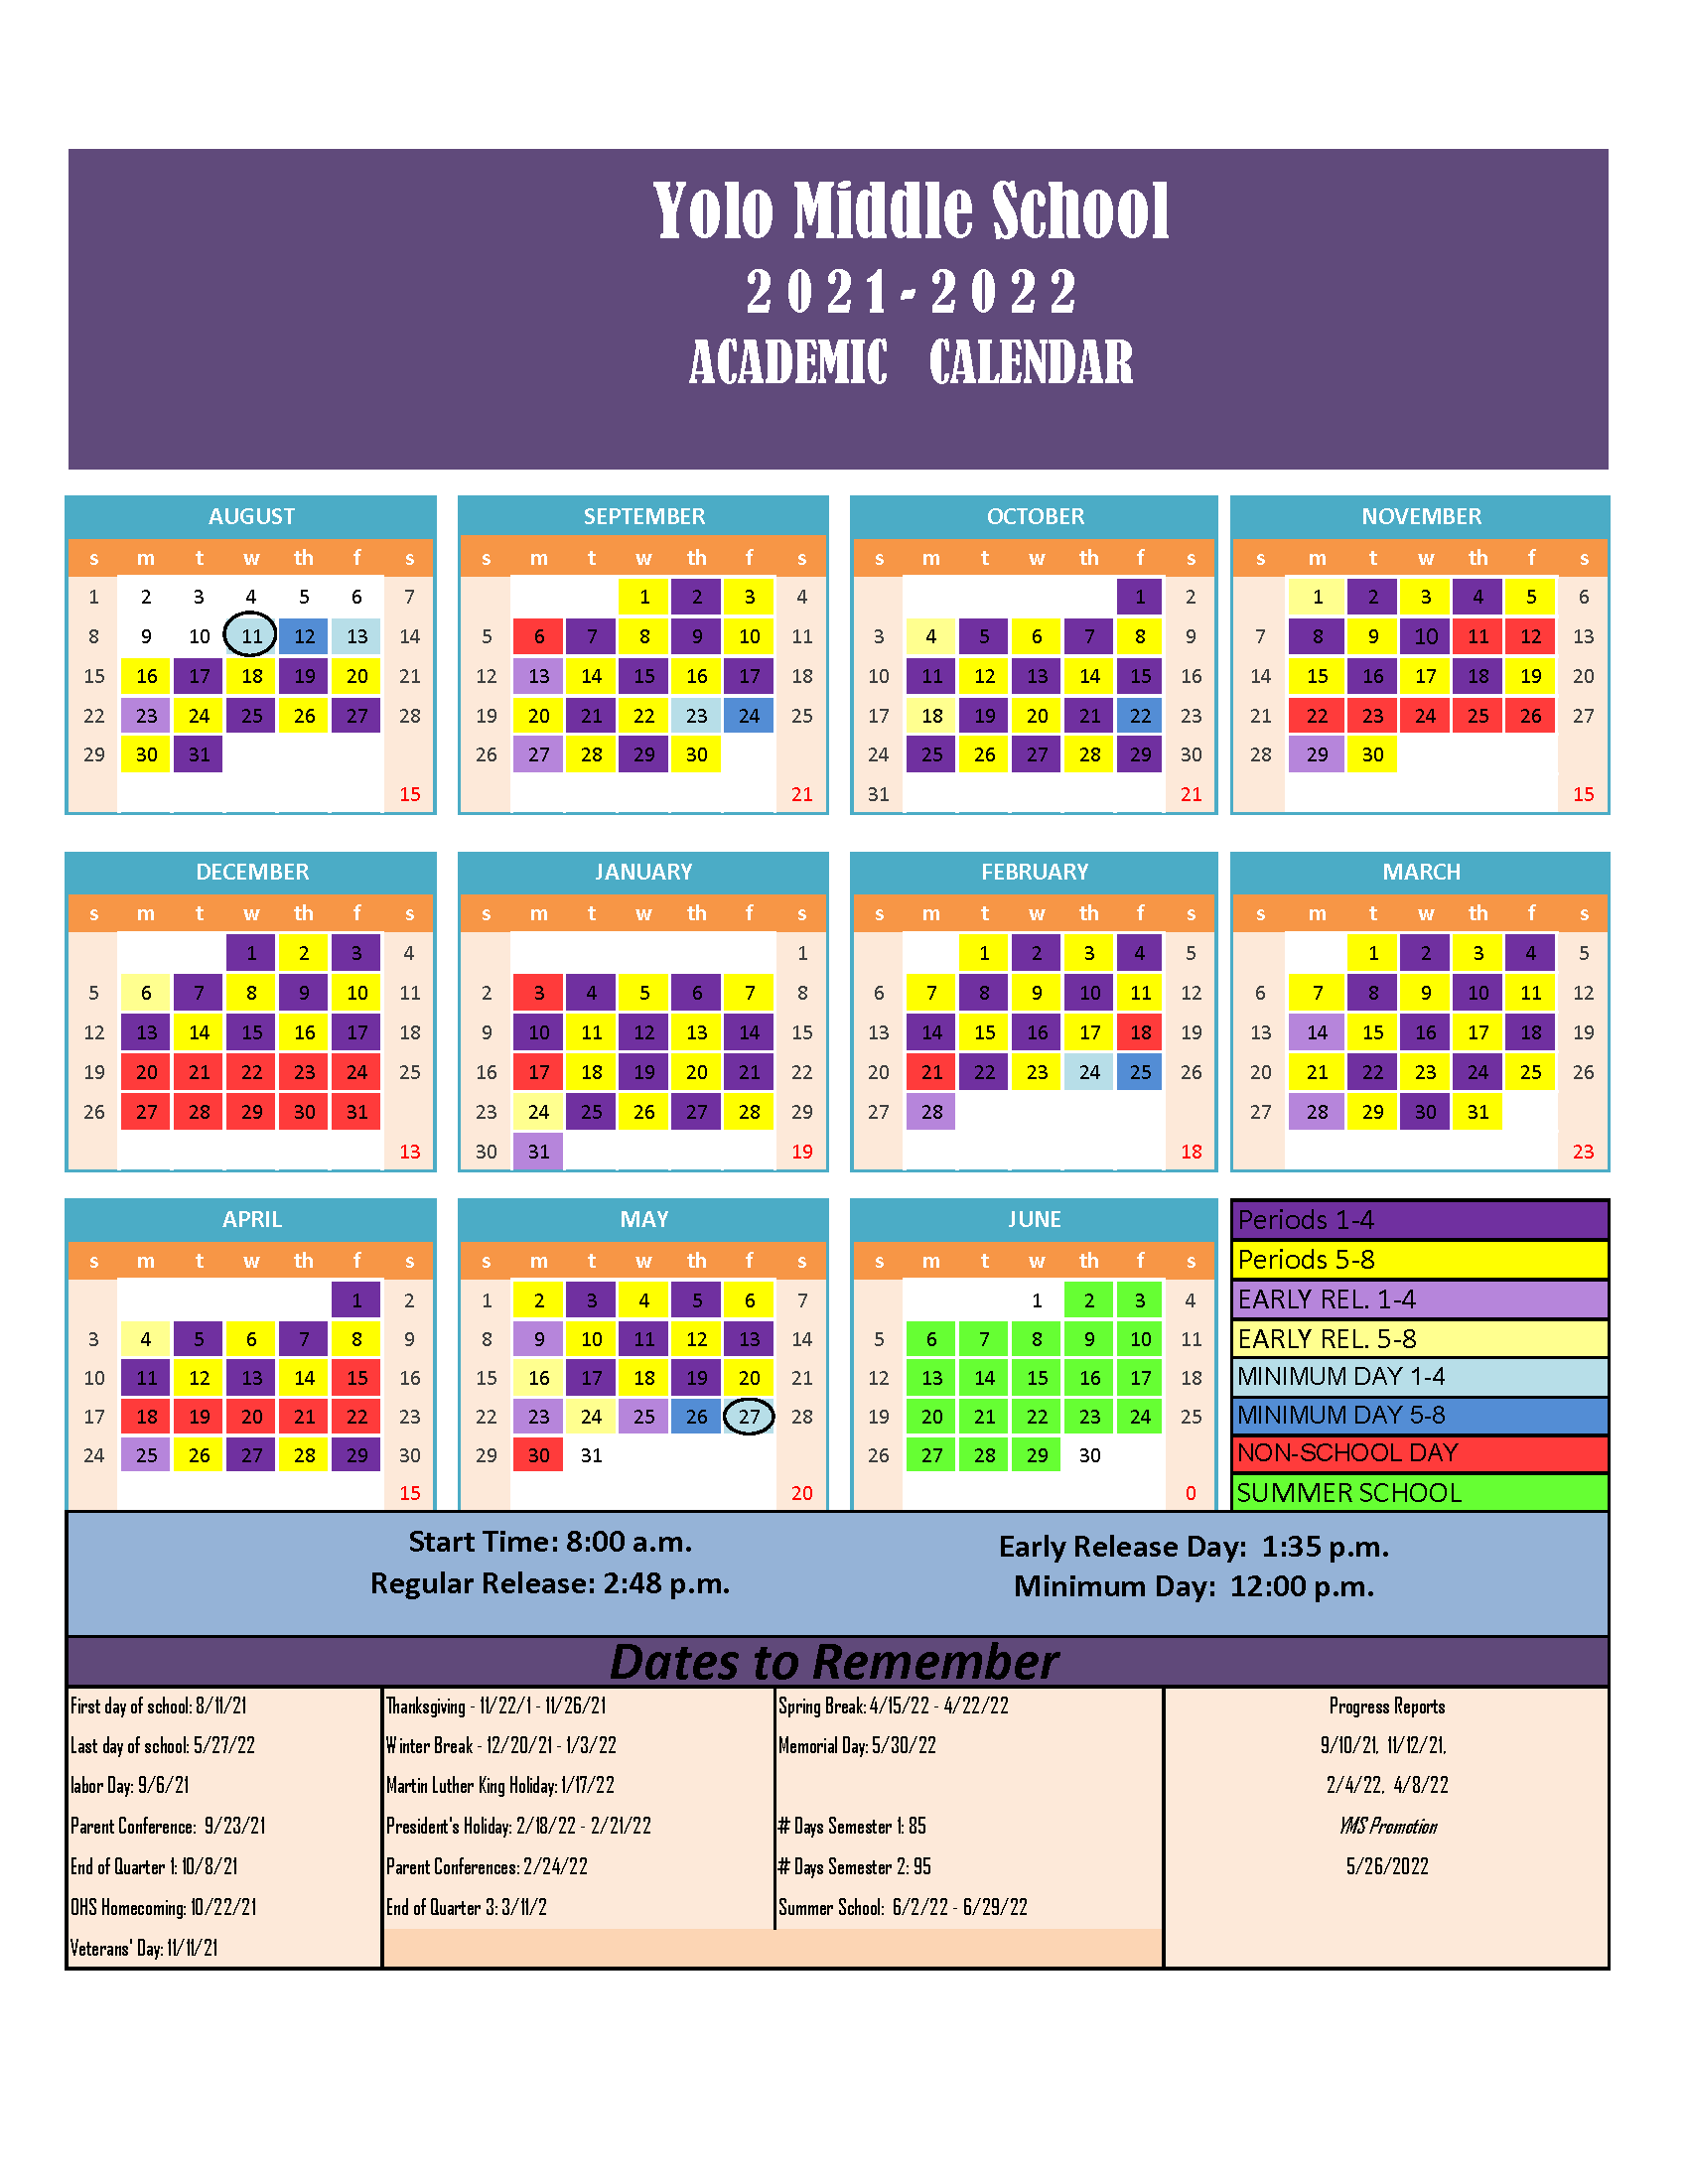 Yolo Middle School 2021-22 Block Calendar